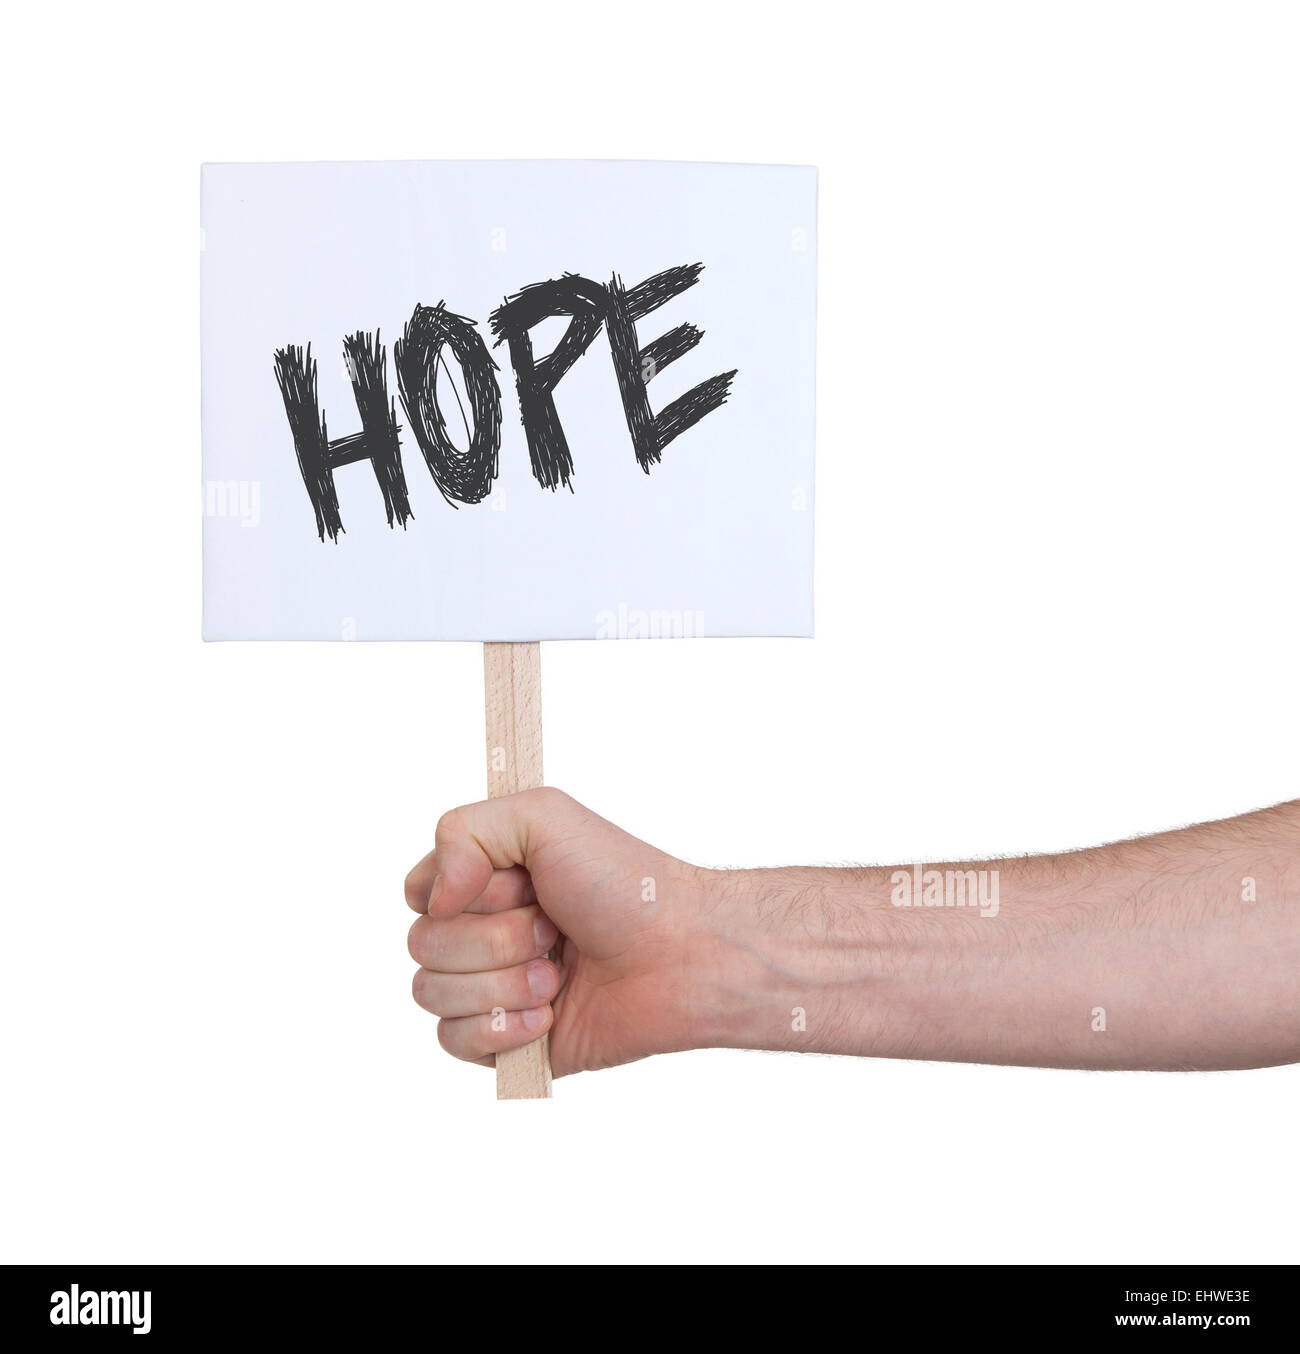 Hand holding sign, isolated on white - Hope Stock Photo